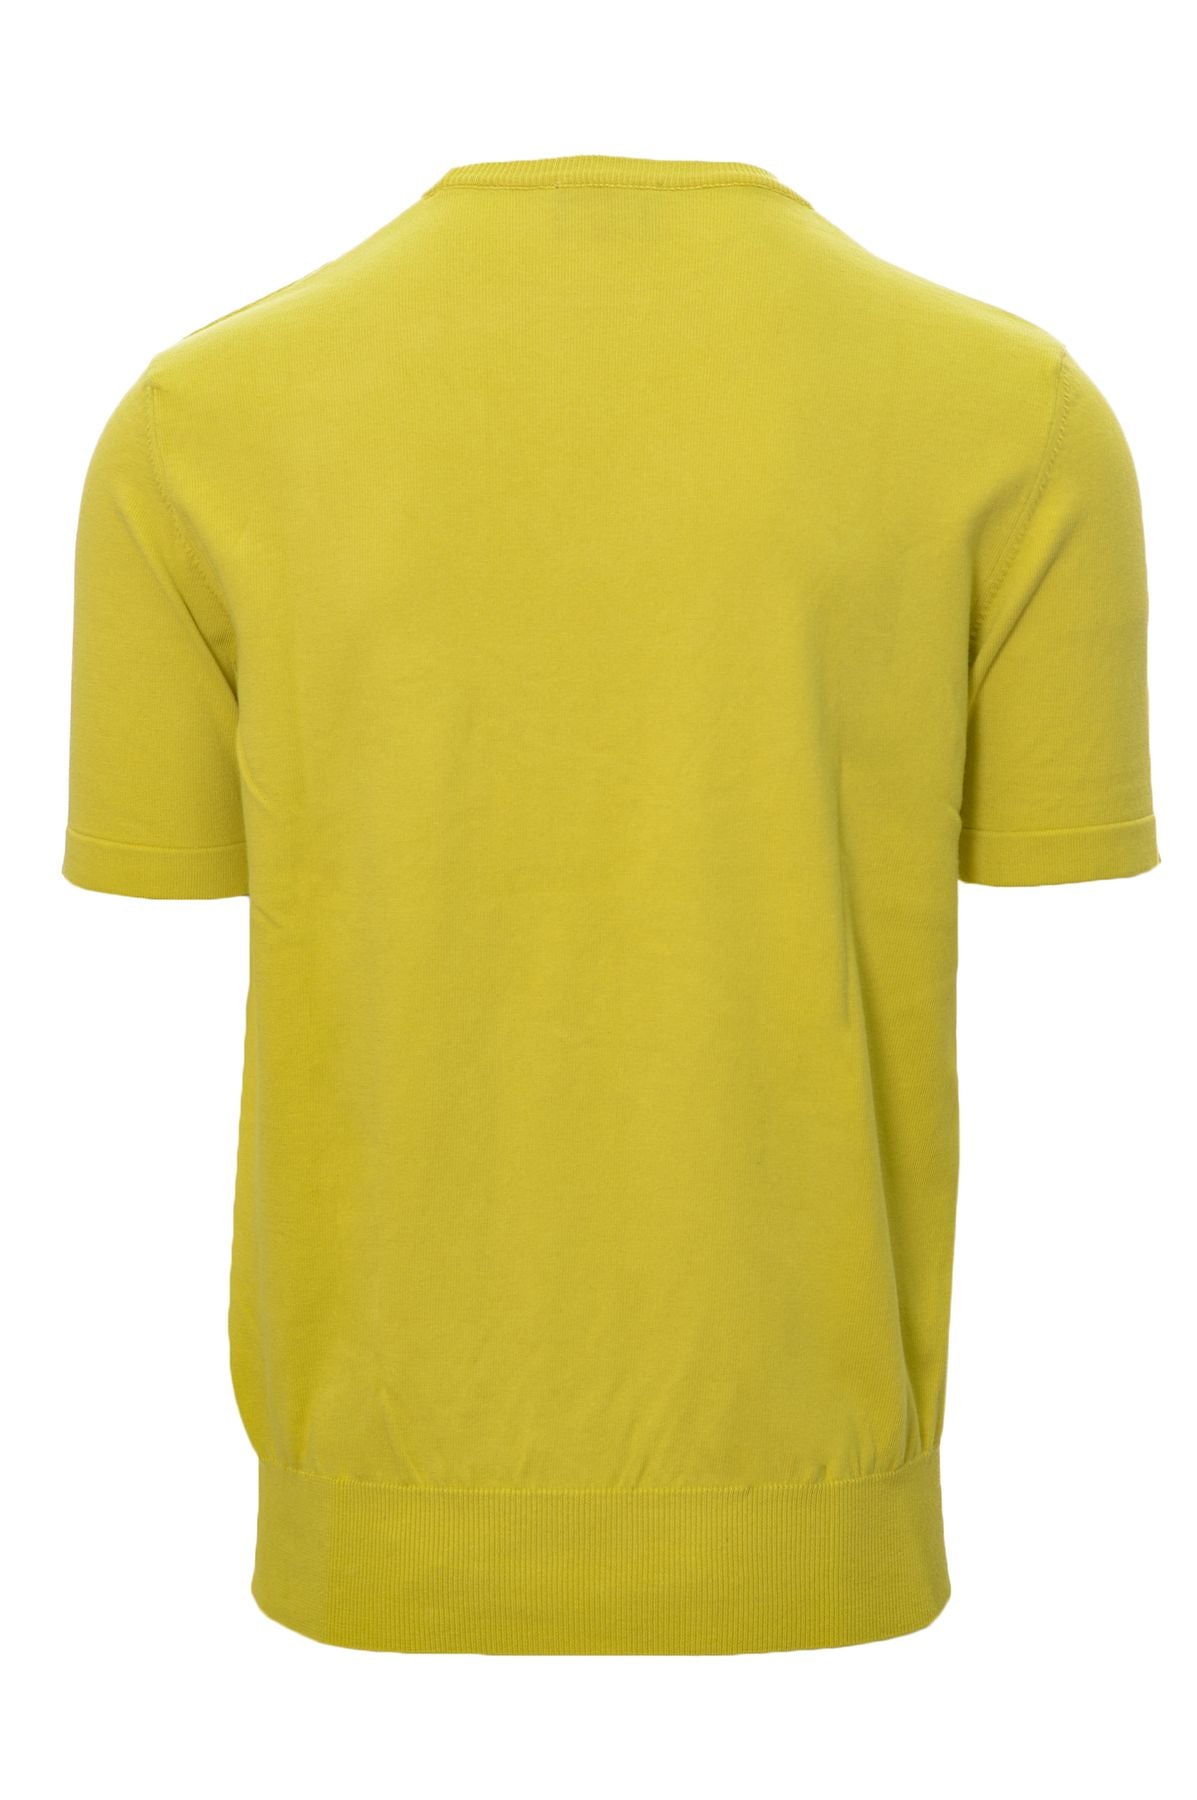 PEUTEREY Camiseta Algodón Primavera/Verano